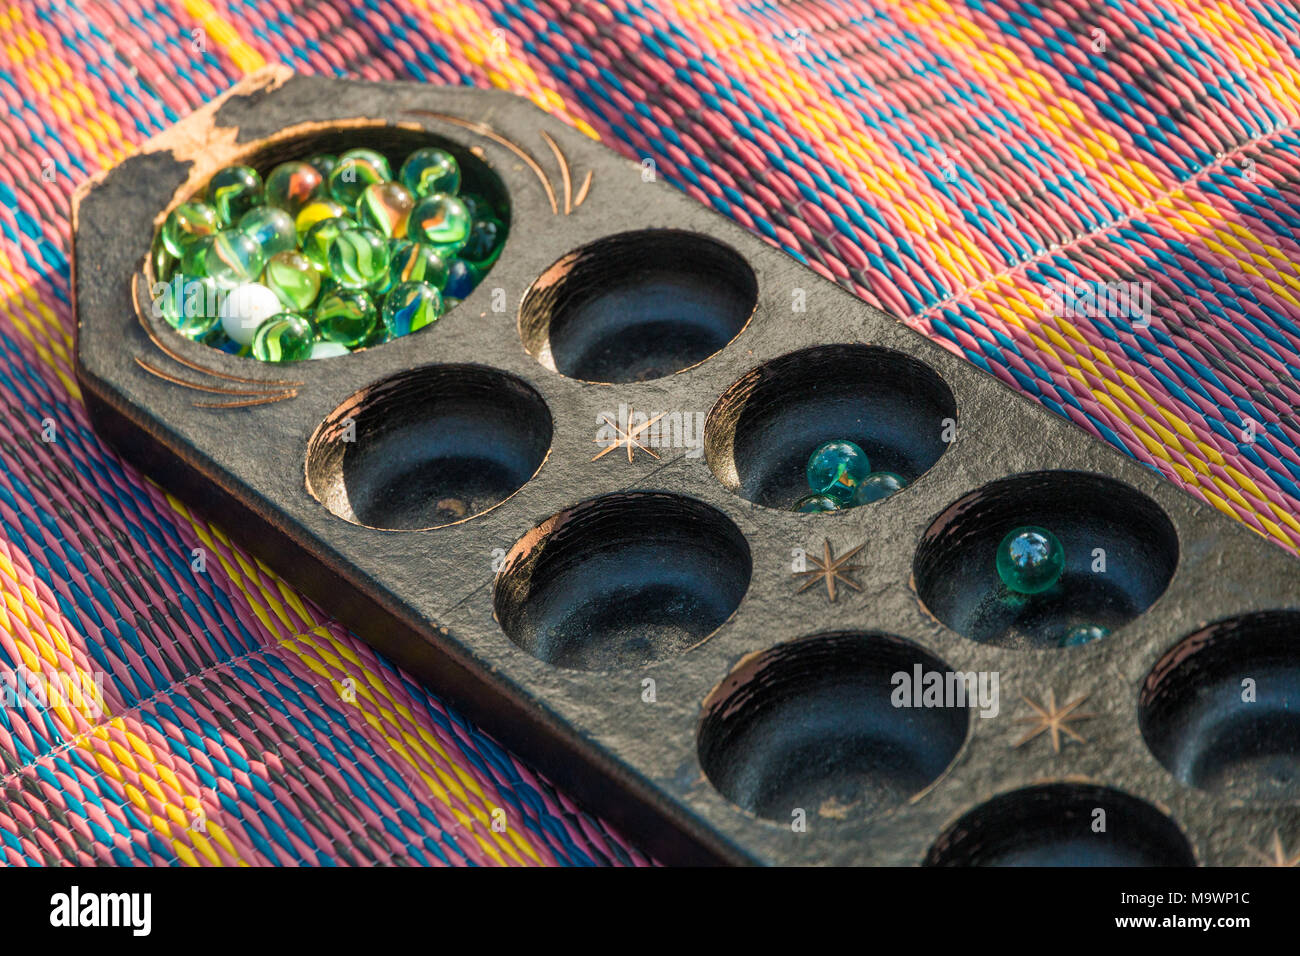 Close-up of a congkak or congklak which is a mancala marble game of Malay origin. Stock Photo